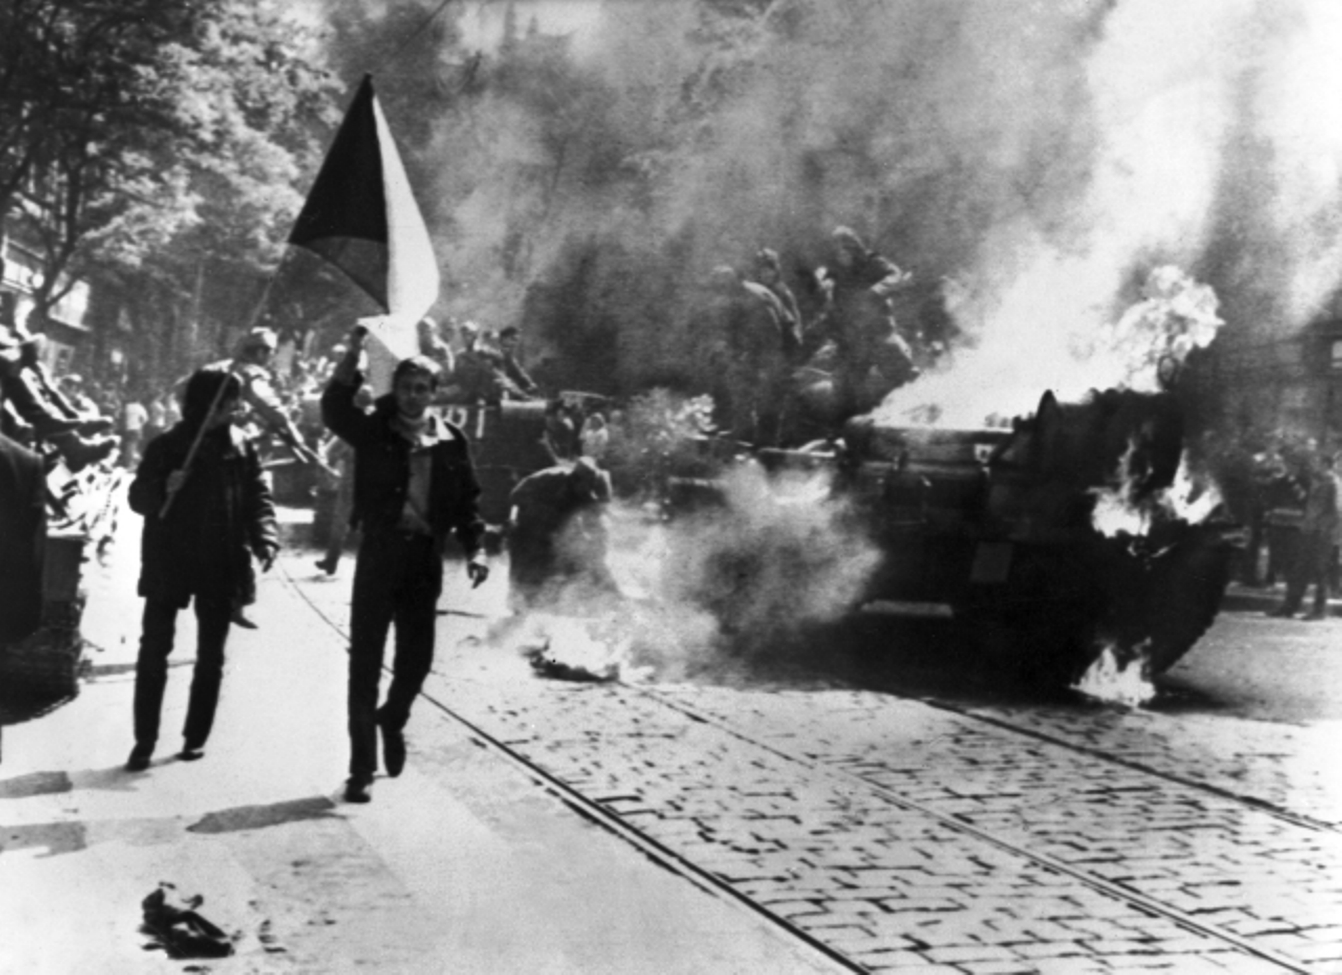 January 5, 1968: the Prague Spring Begins